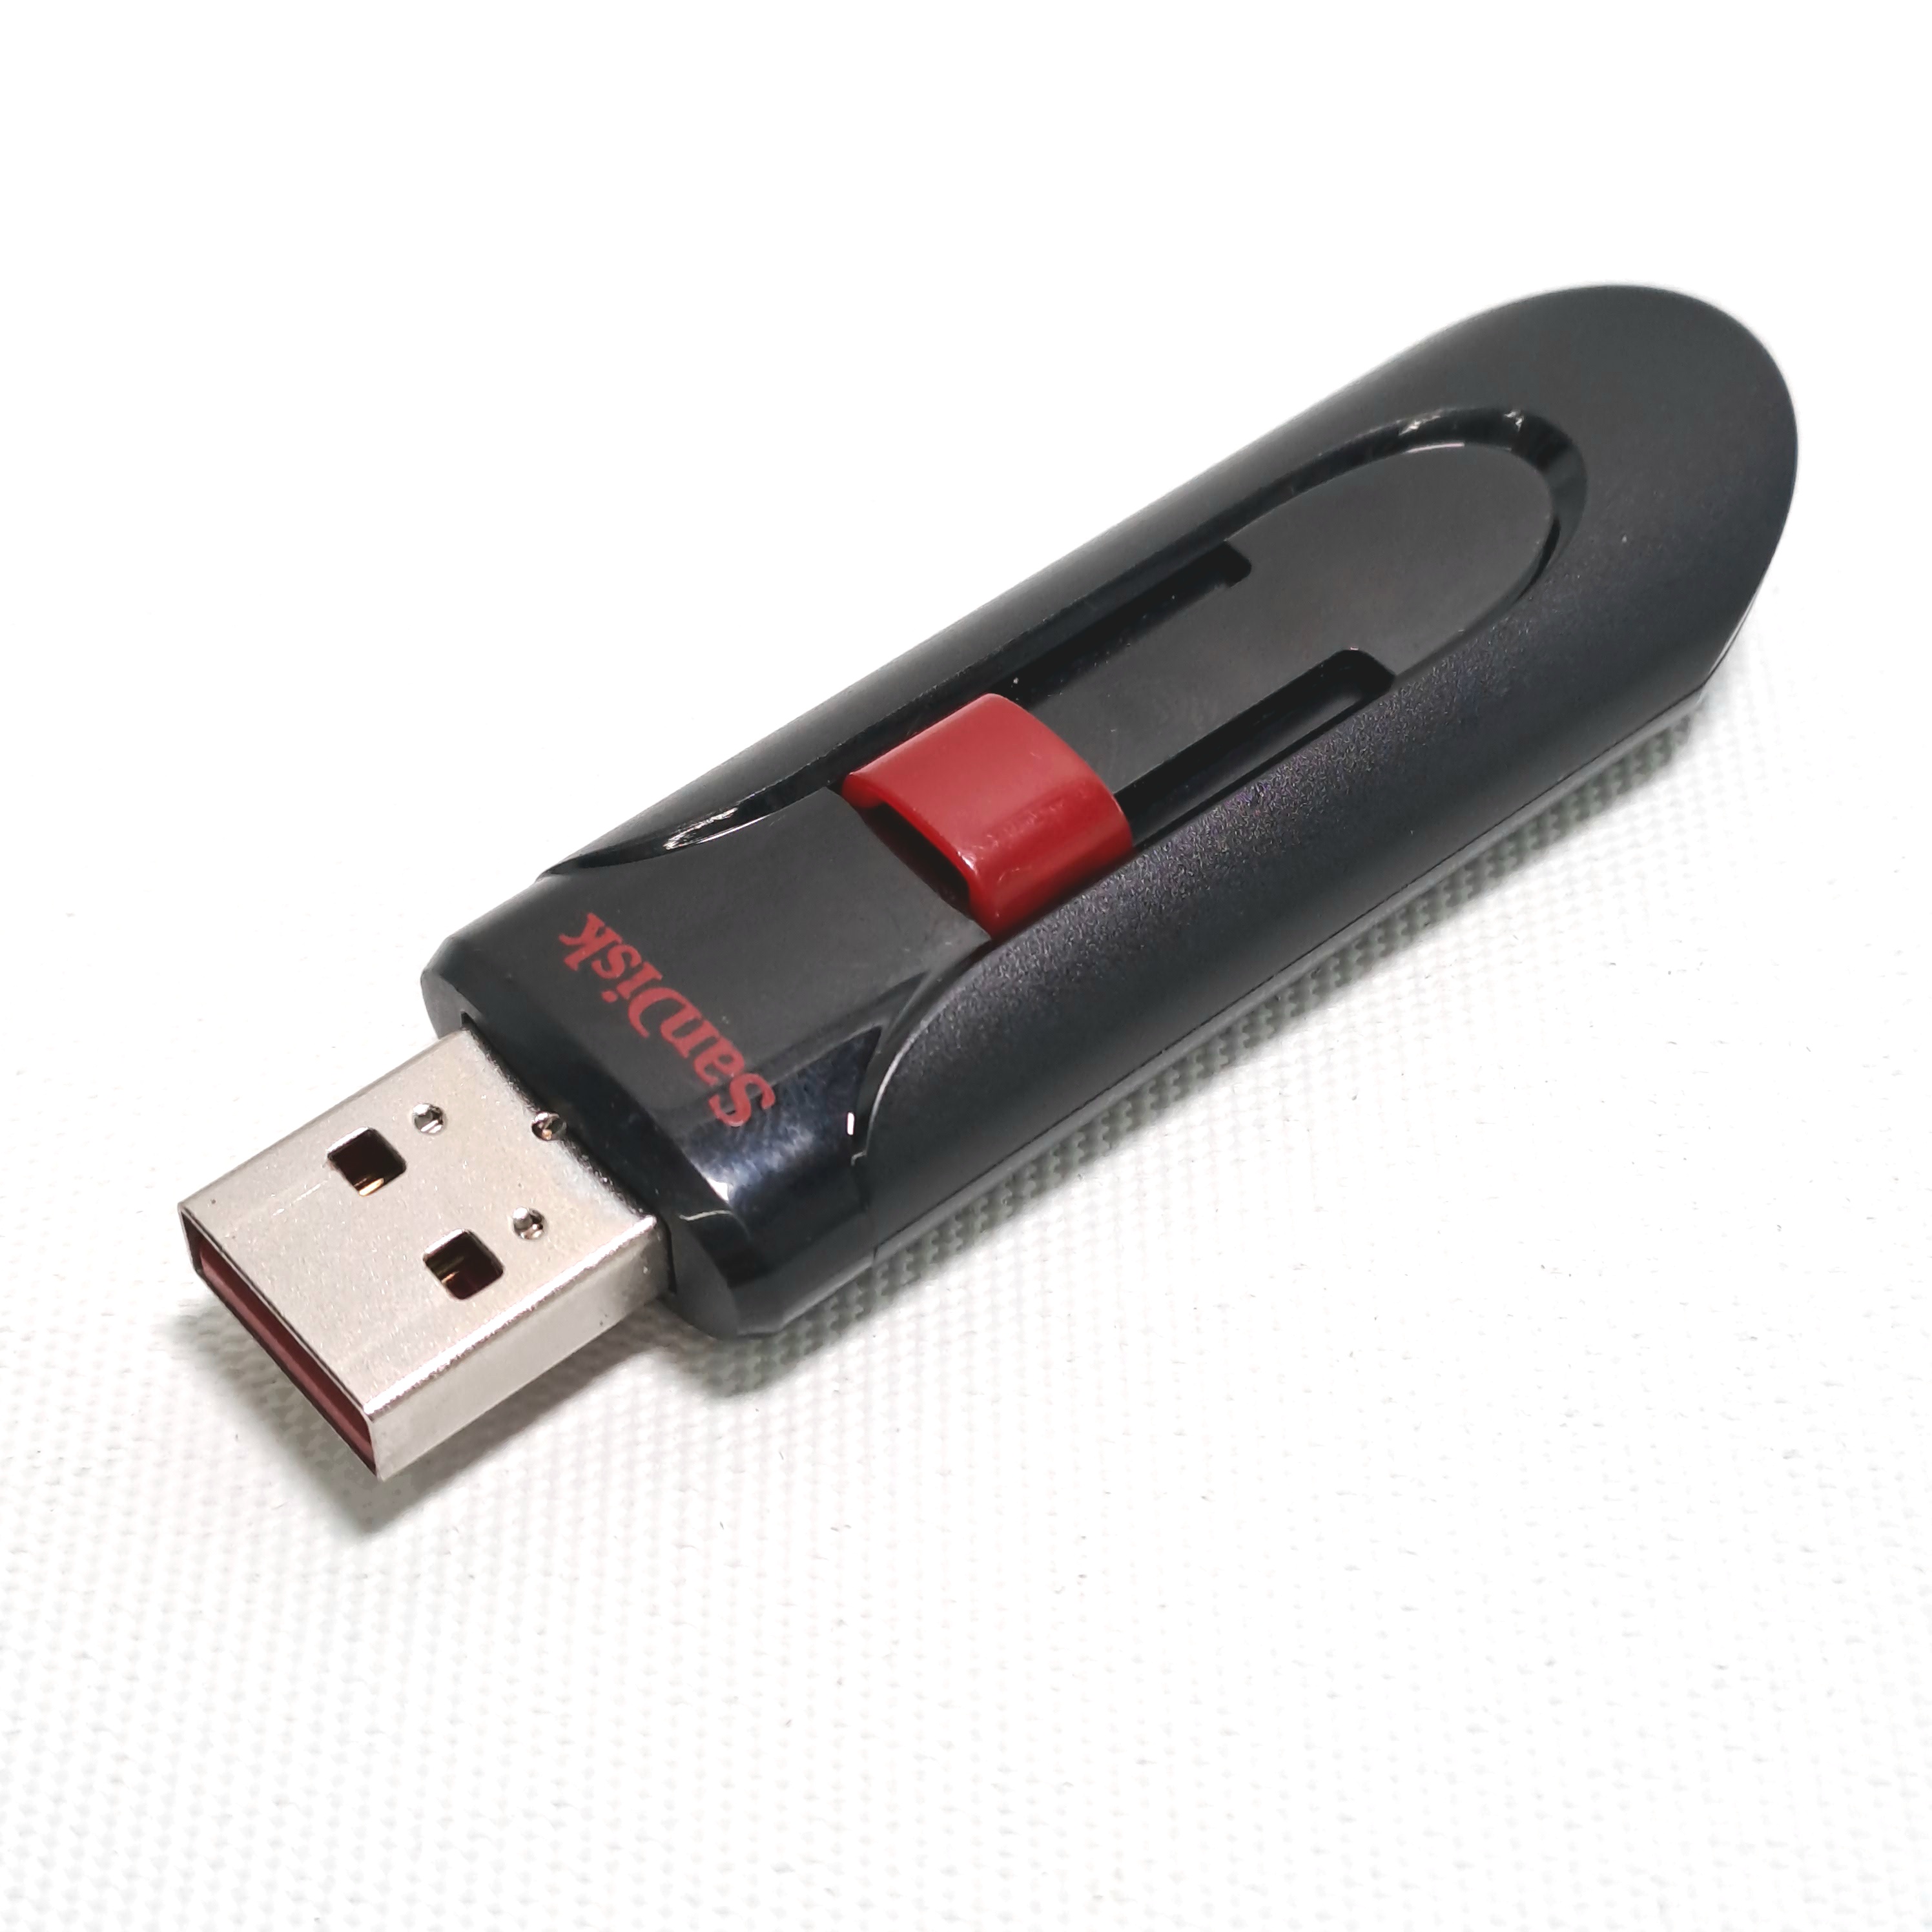 SanDisk Cruzer Glide 3.0 USB Flash Drive, CZ600 128GB